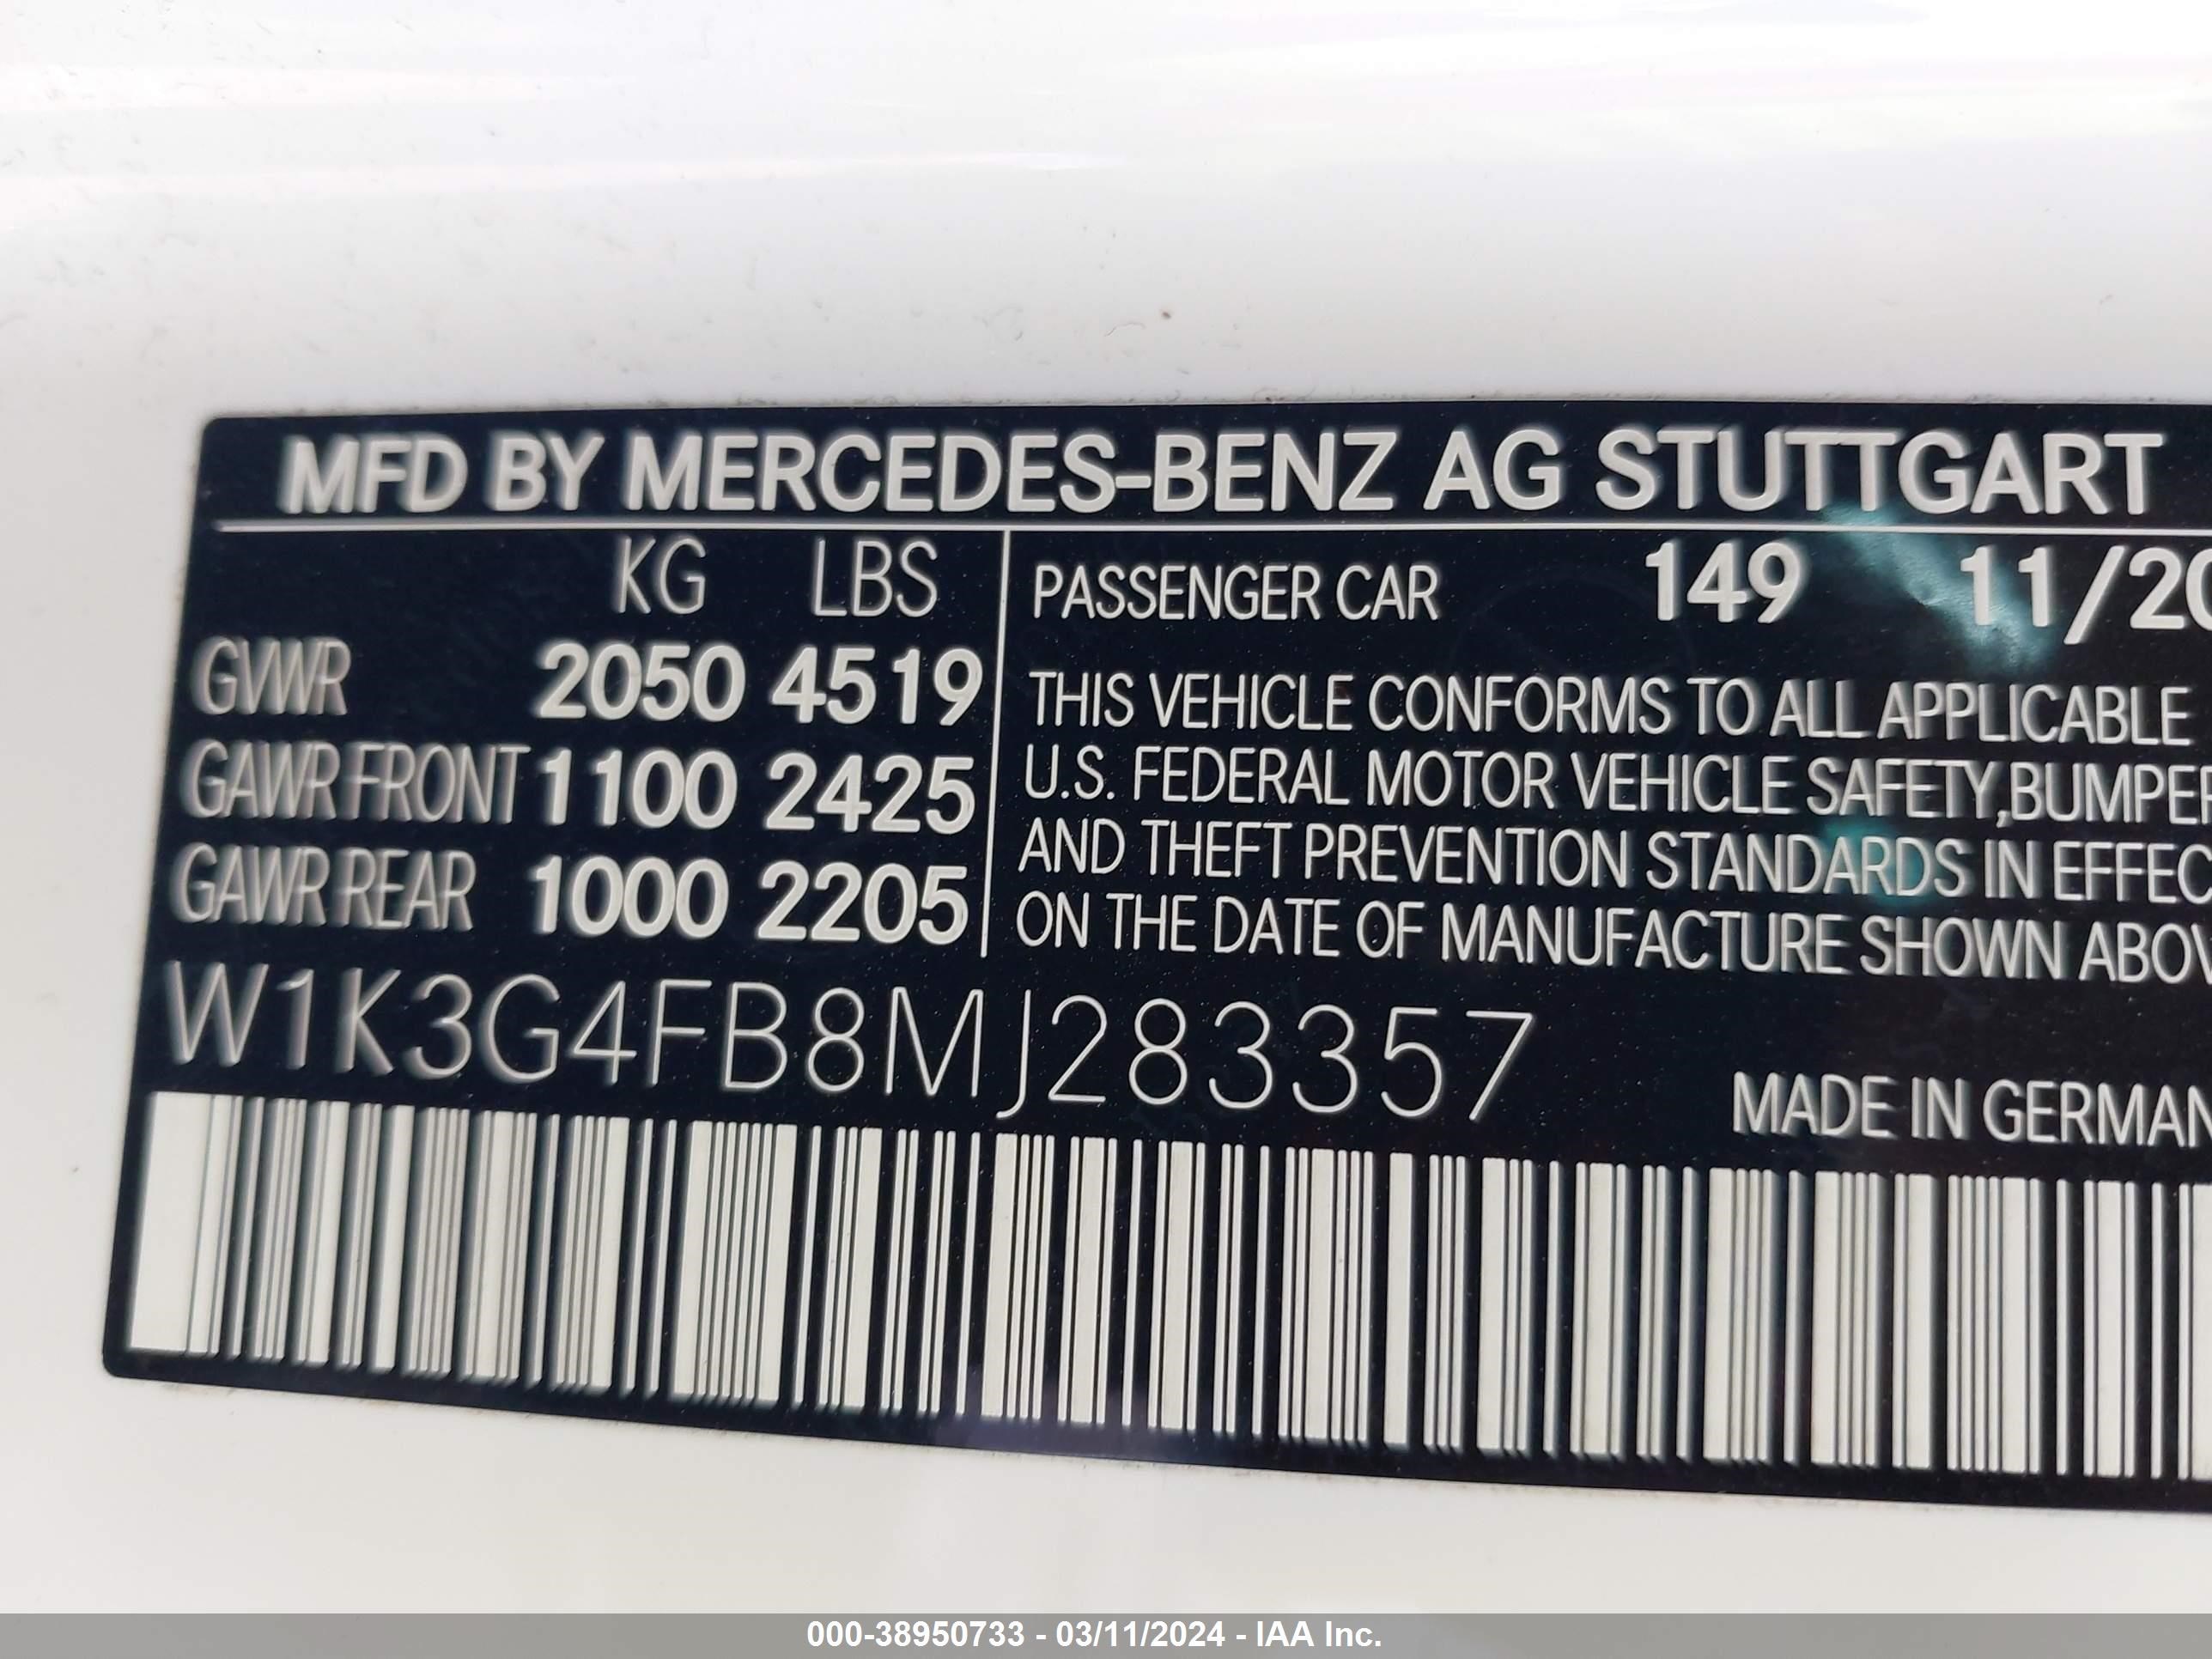 2021 Mercedes-Benz A 220 4Matic vin: W1K3G4FB8MJ283357